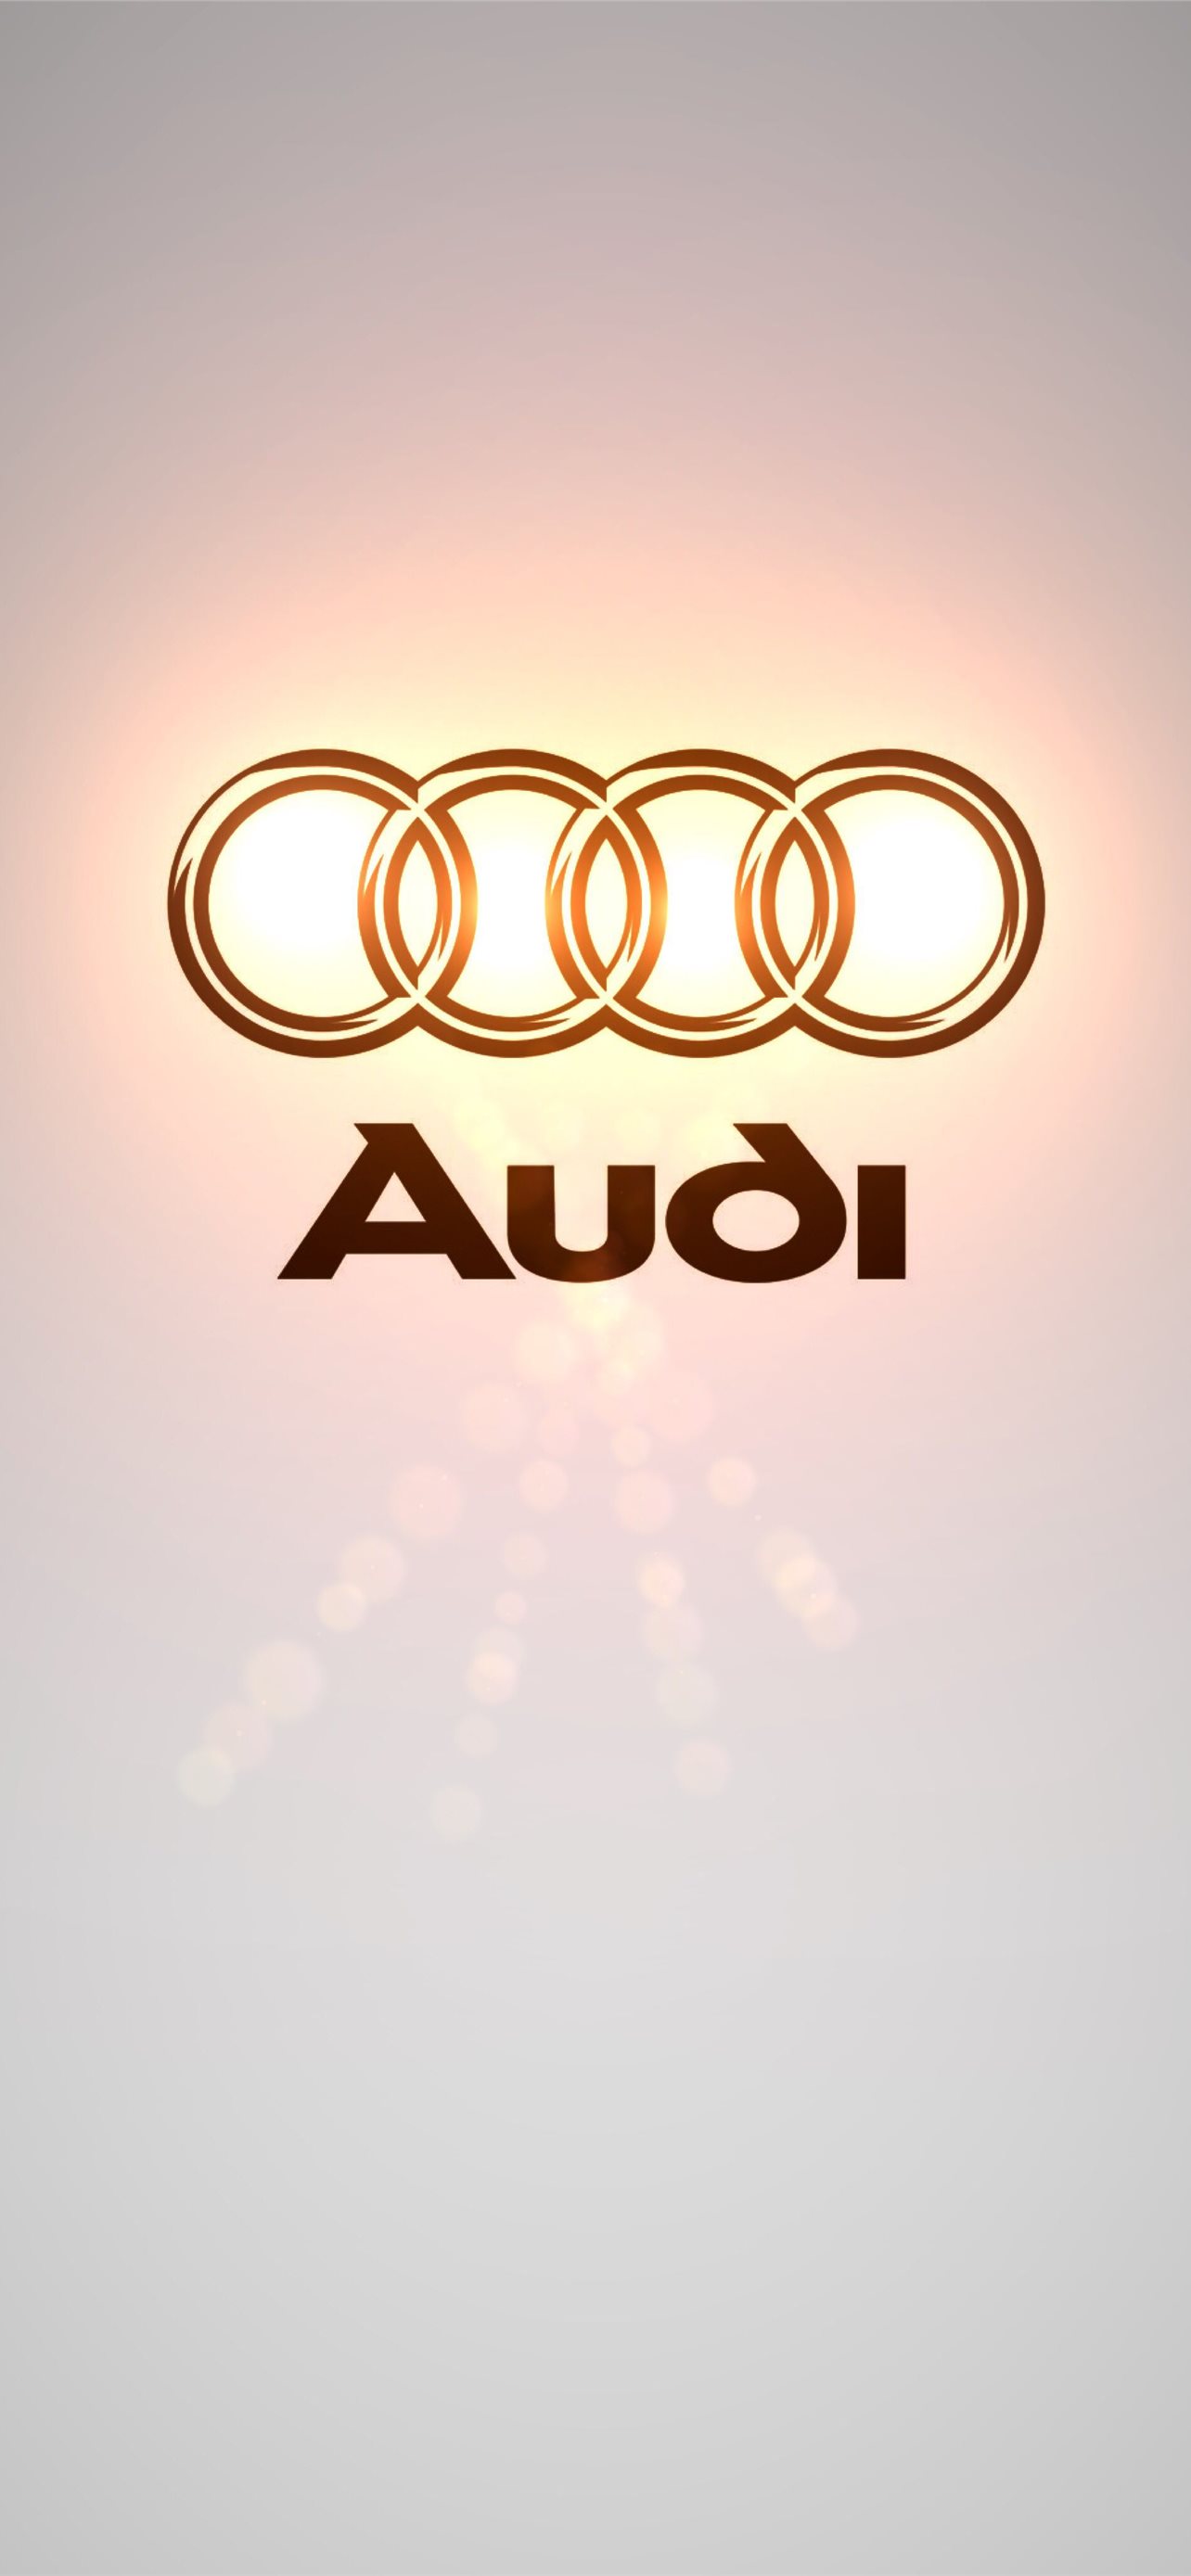 Best audi logo iphone hd wallpapers